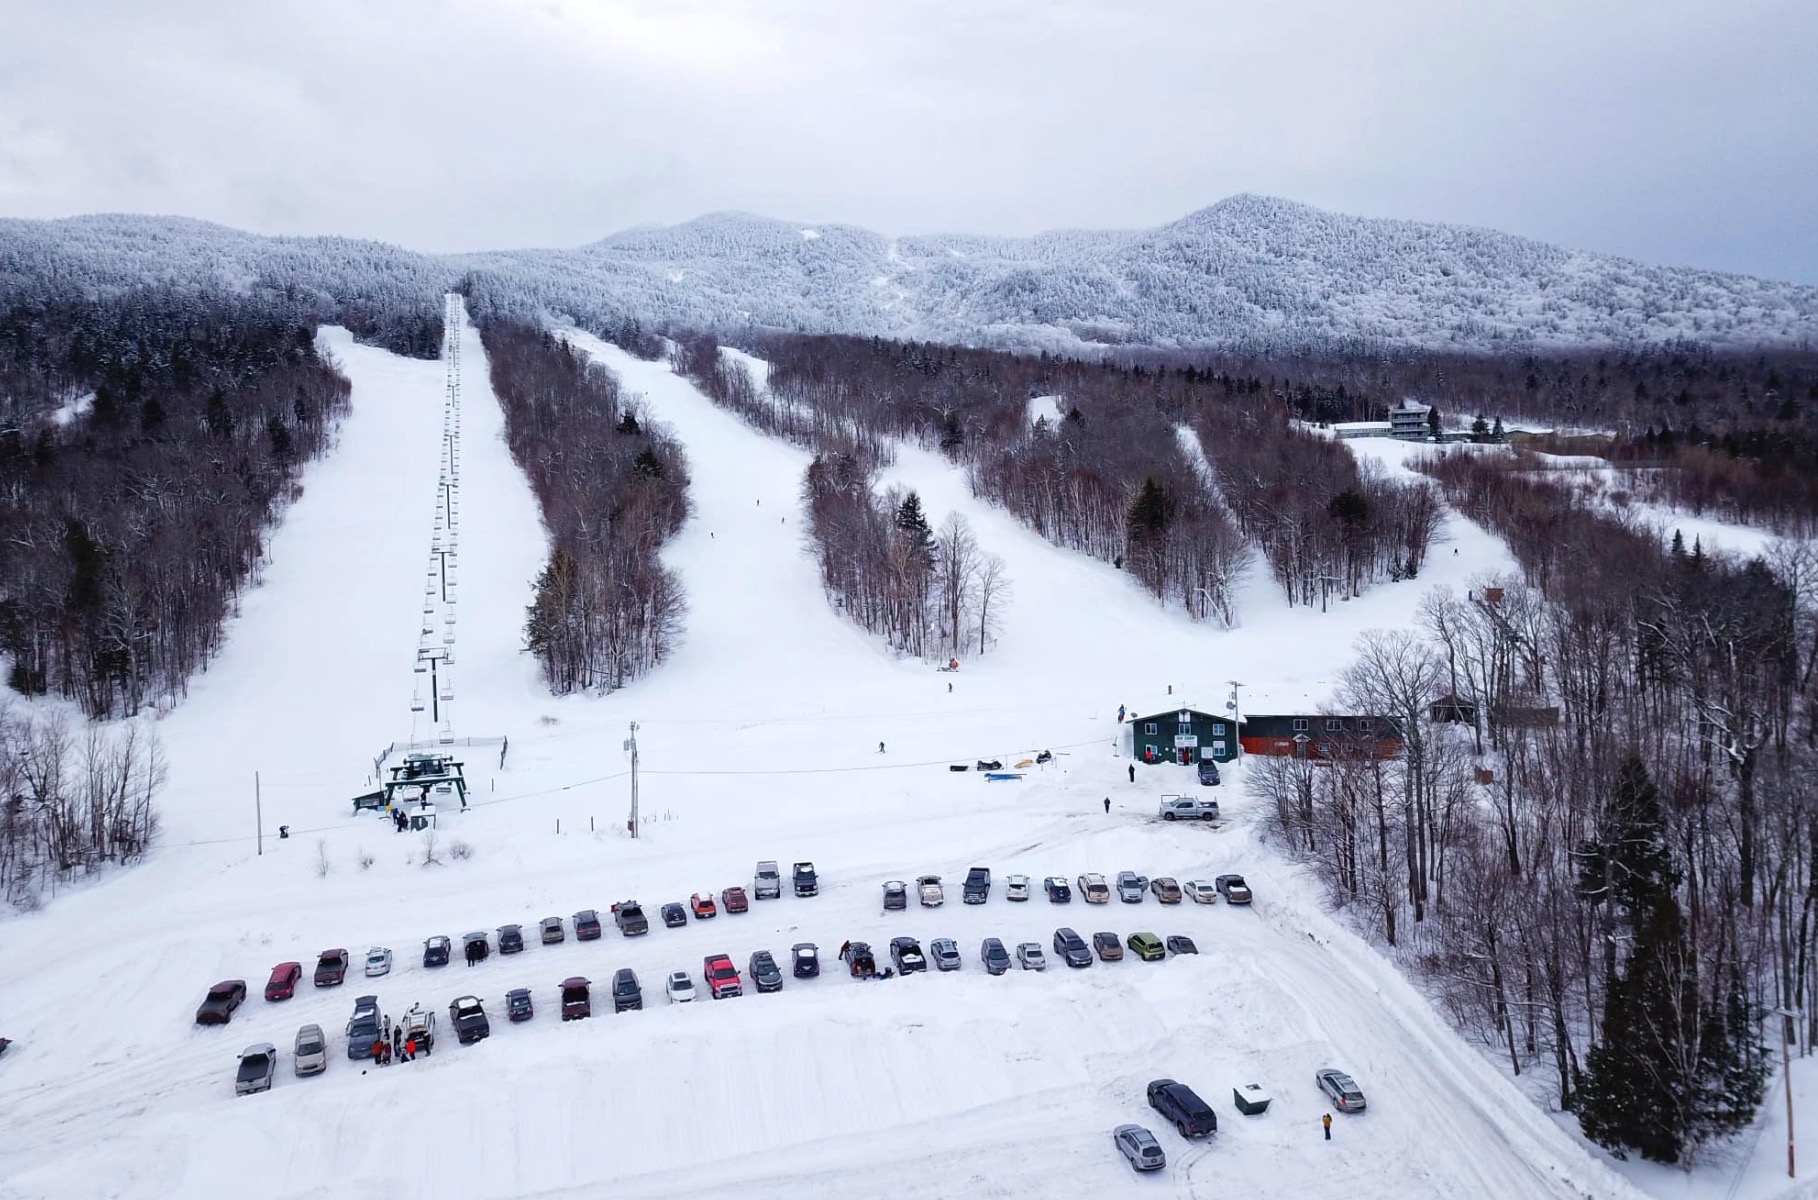 Nonprofit Maine Ski Area Plans $200,000 In Capital Improvements